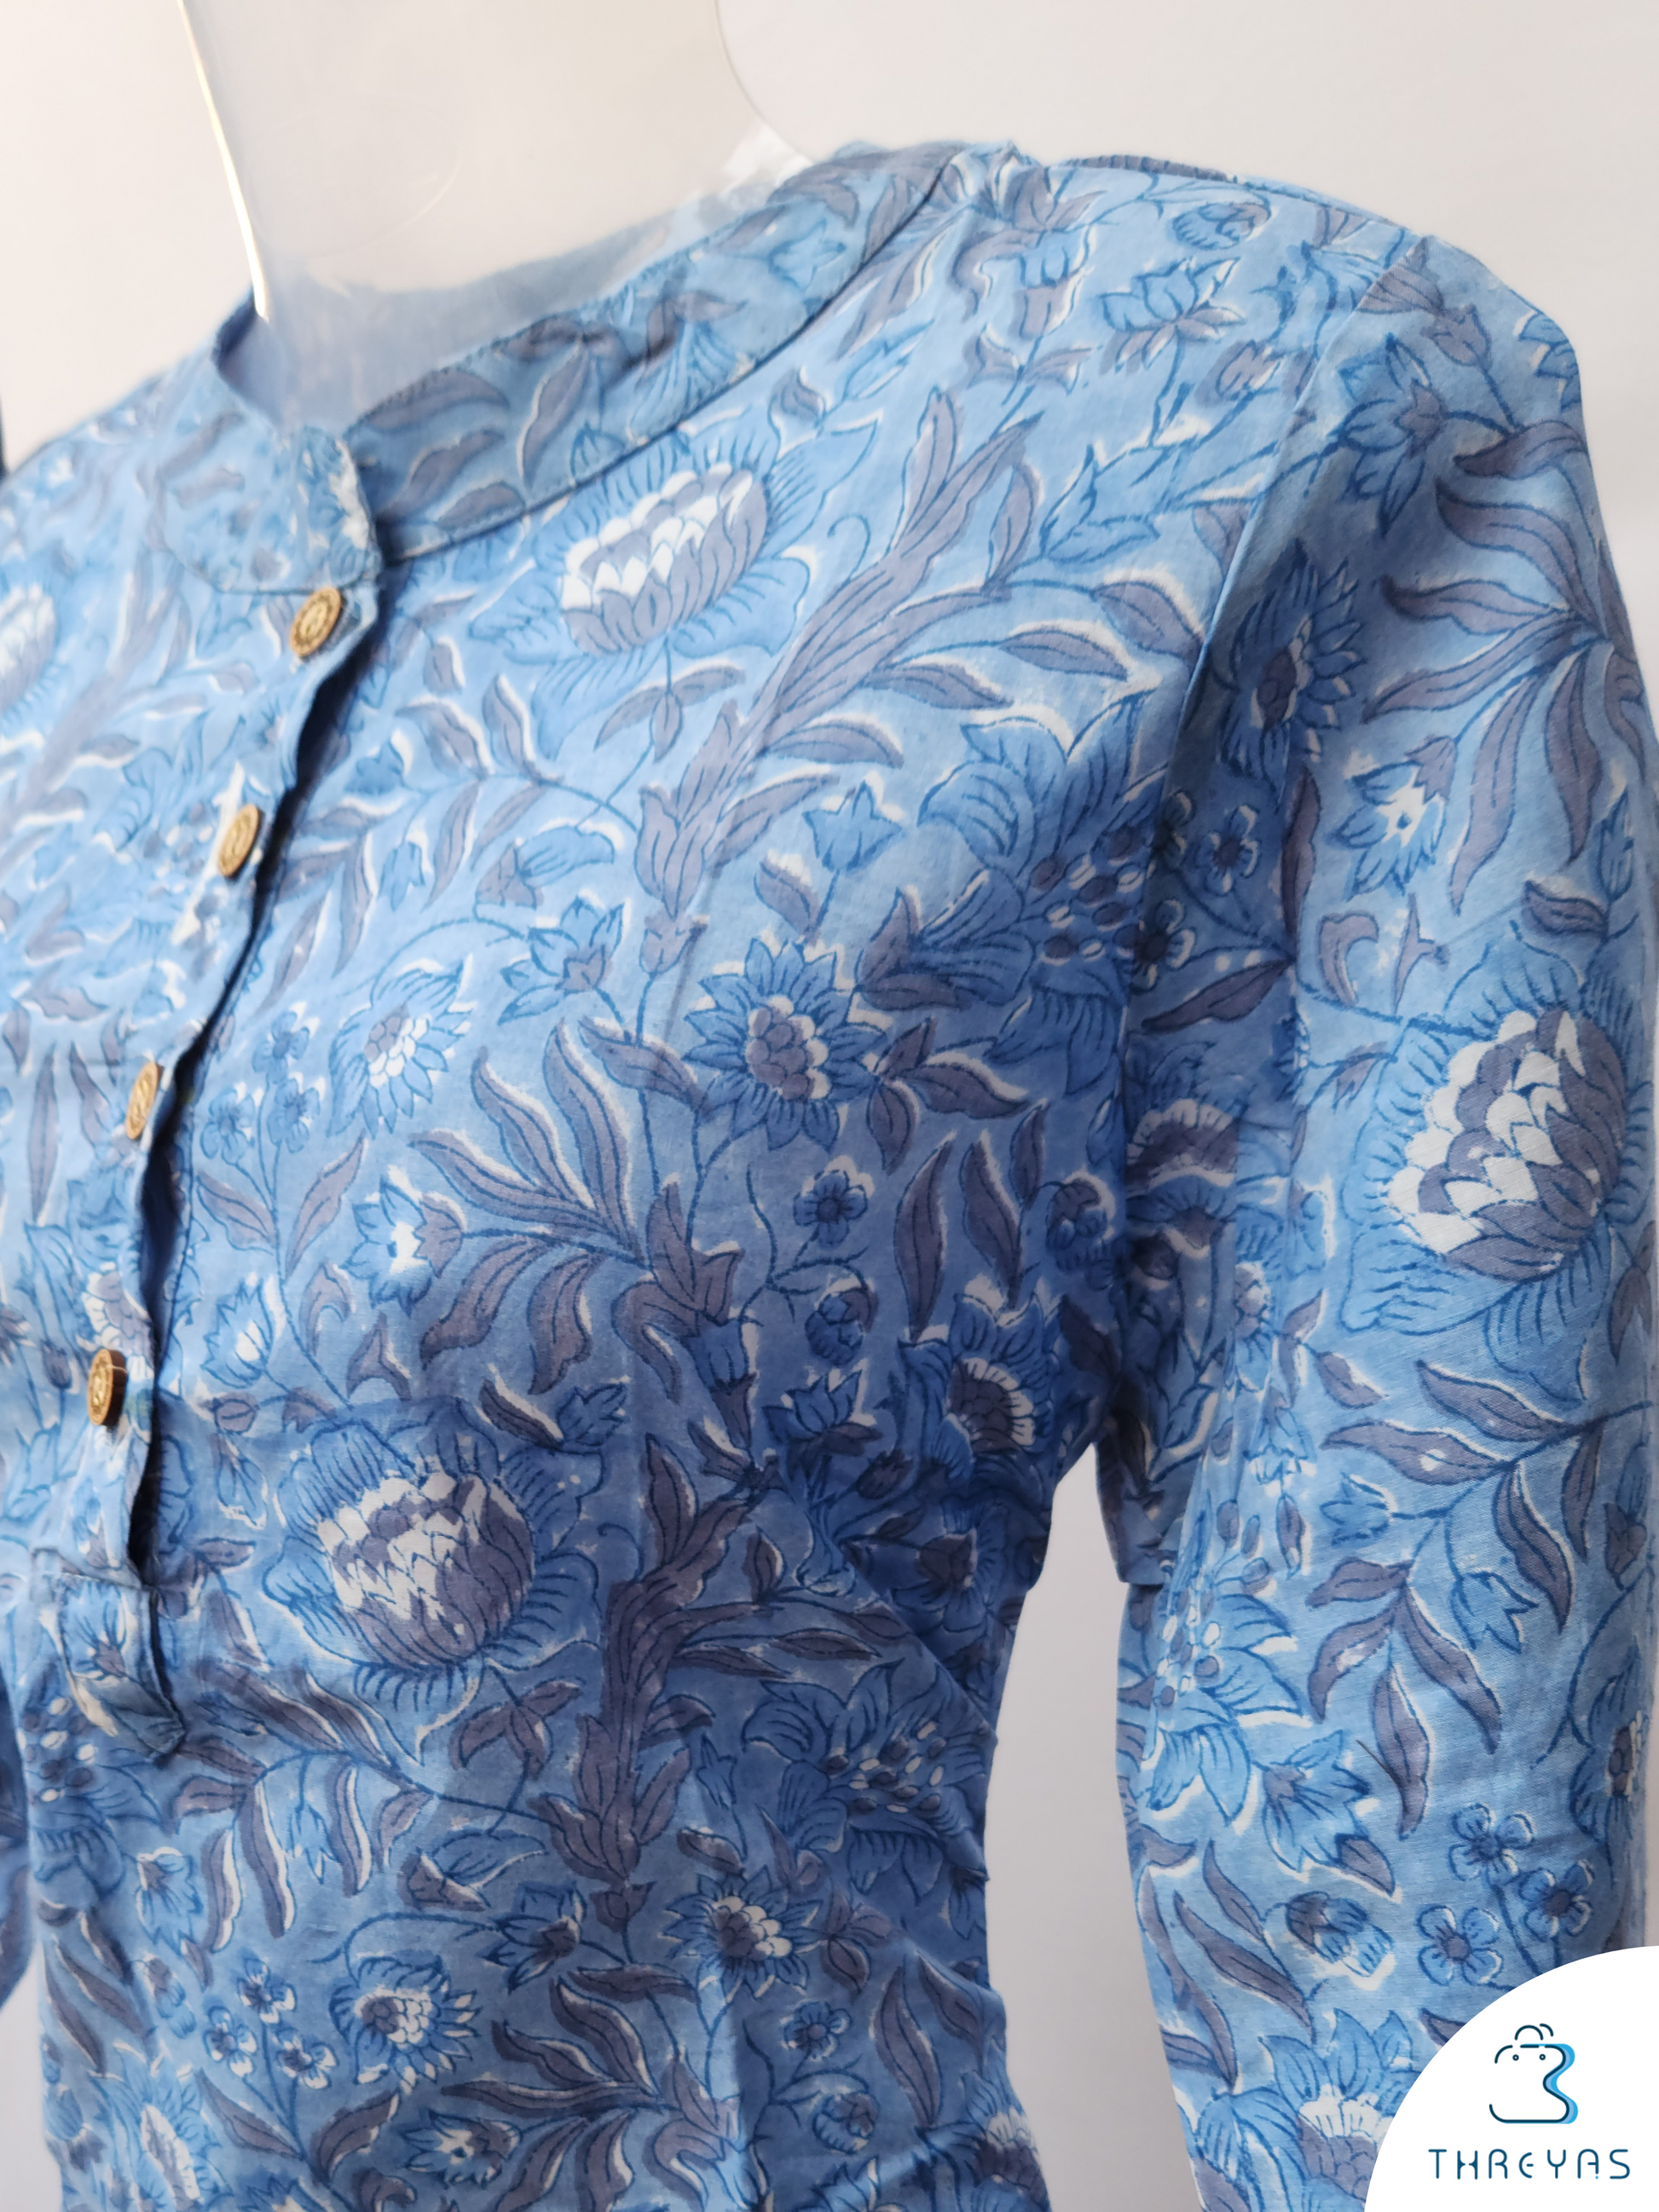 Sky Blue Cotton kurthis Set for women |Stylish Kurthis & Kurtis Sets for Women |Threyas 